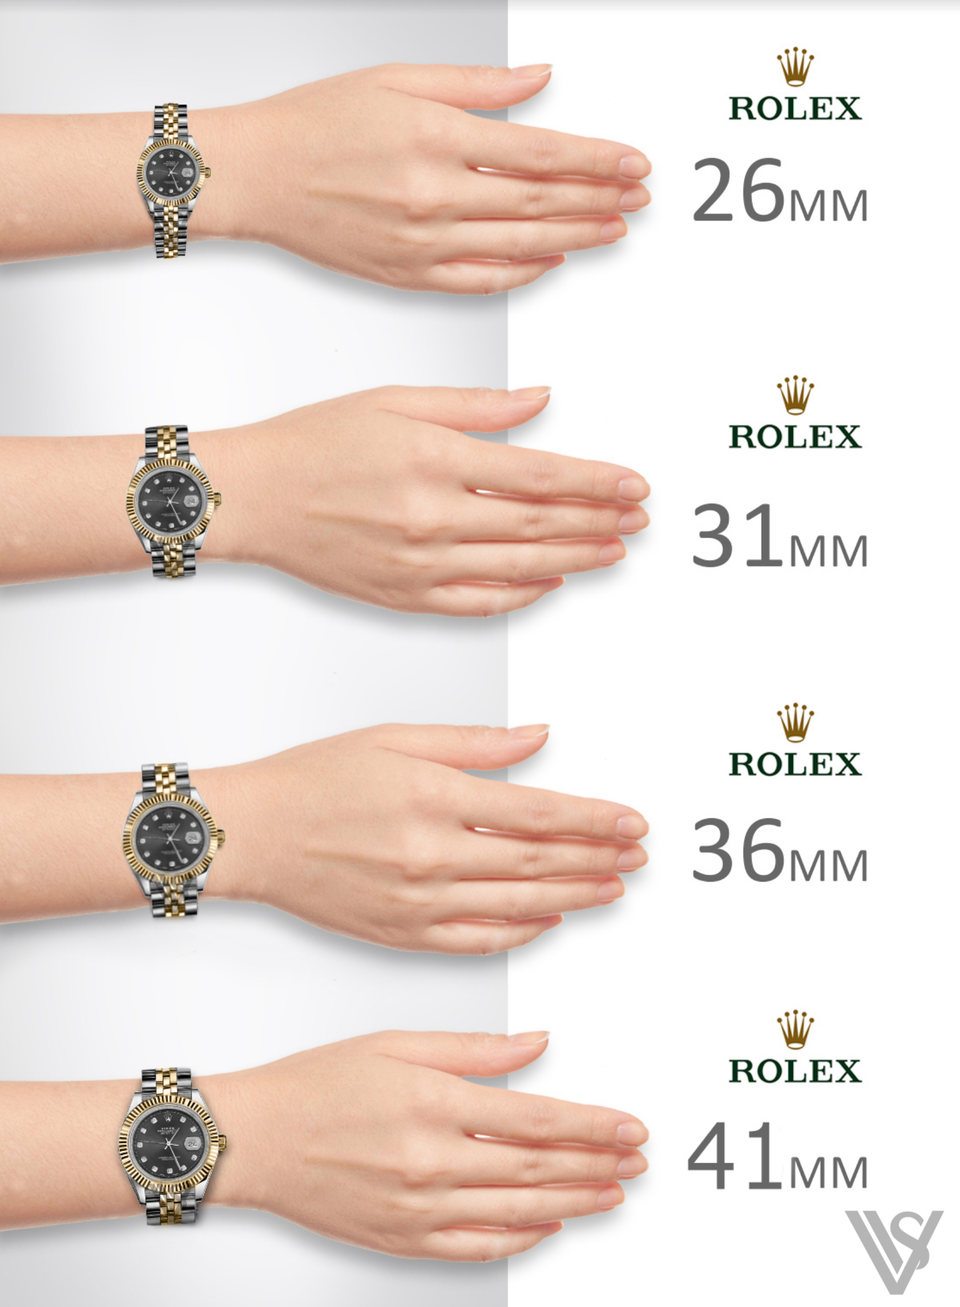 Rolex - Datejust - 36mm Blue Stick Index Dial 18K White Gold Fluted Bezel Stainless Steel Jubilee Bracelet Men's Watch